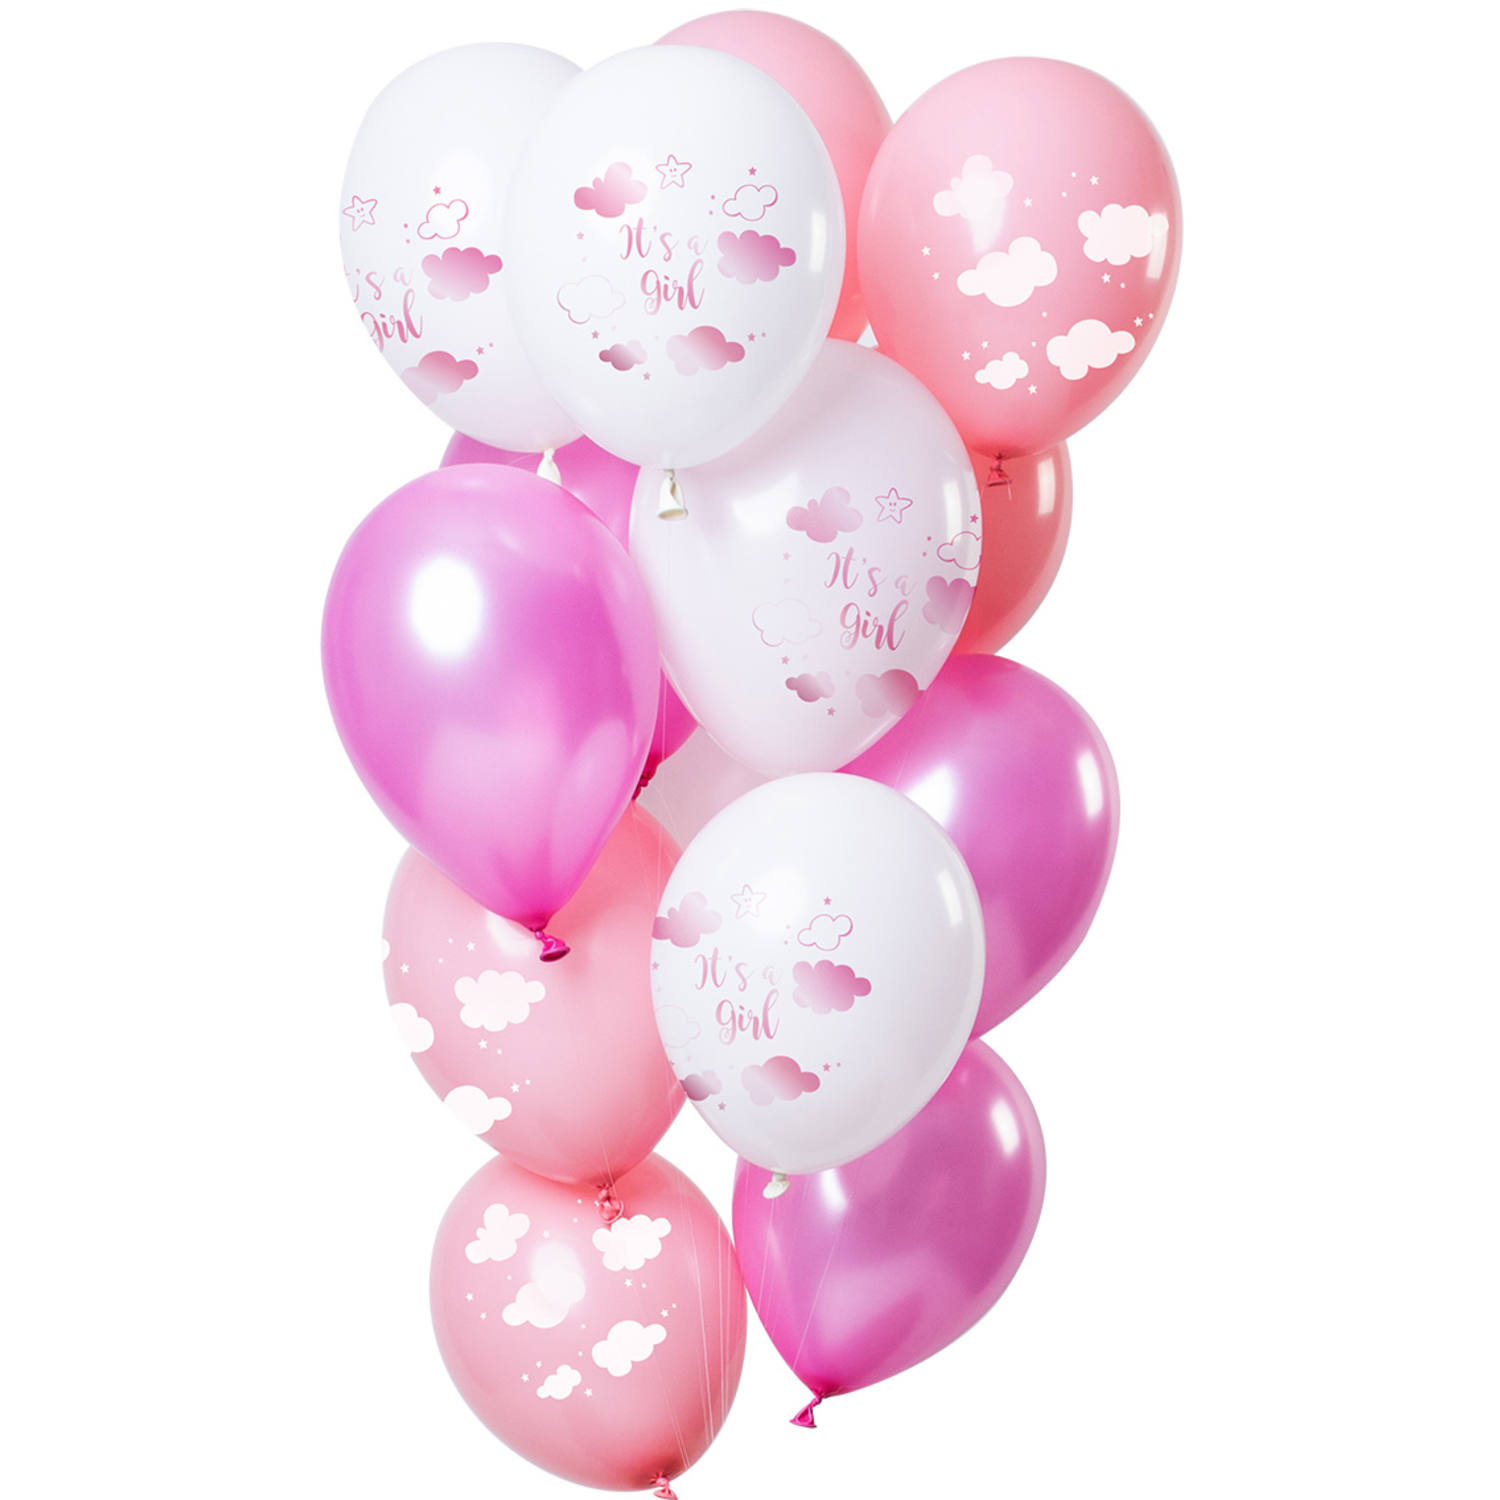 Ballon Set "It's a girl" Pink/Weiß 30cm - 12 Stück von Folat B.V.